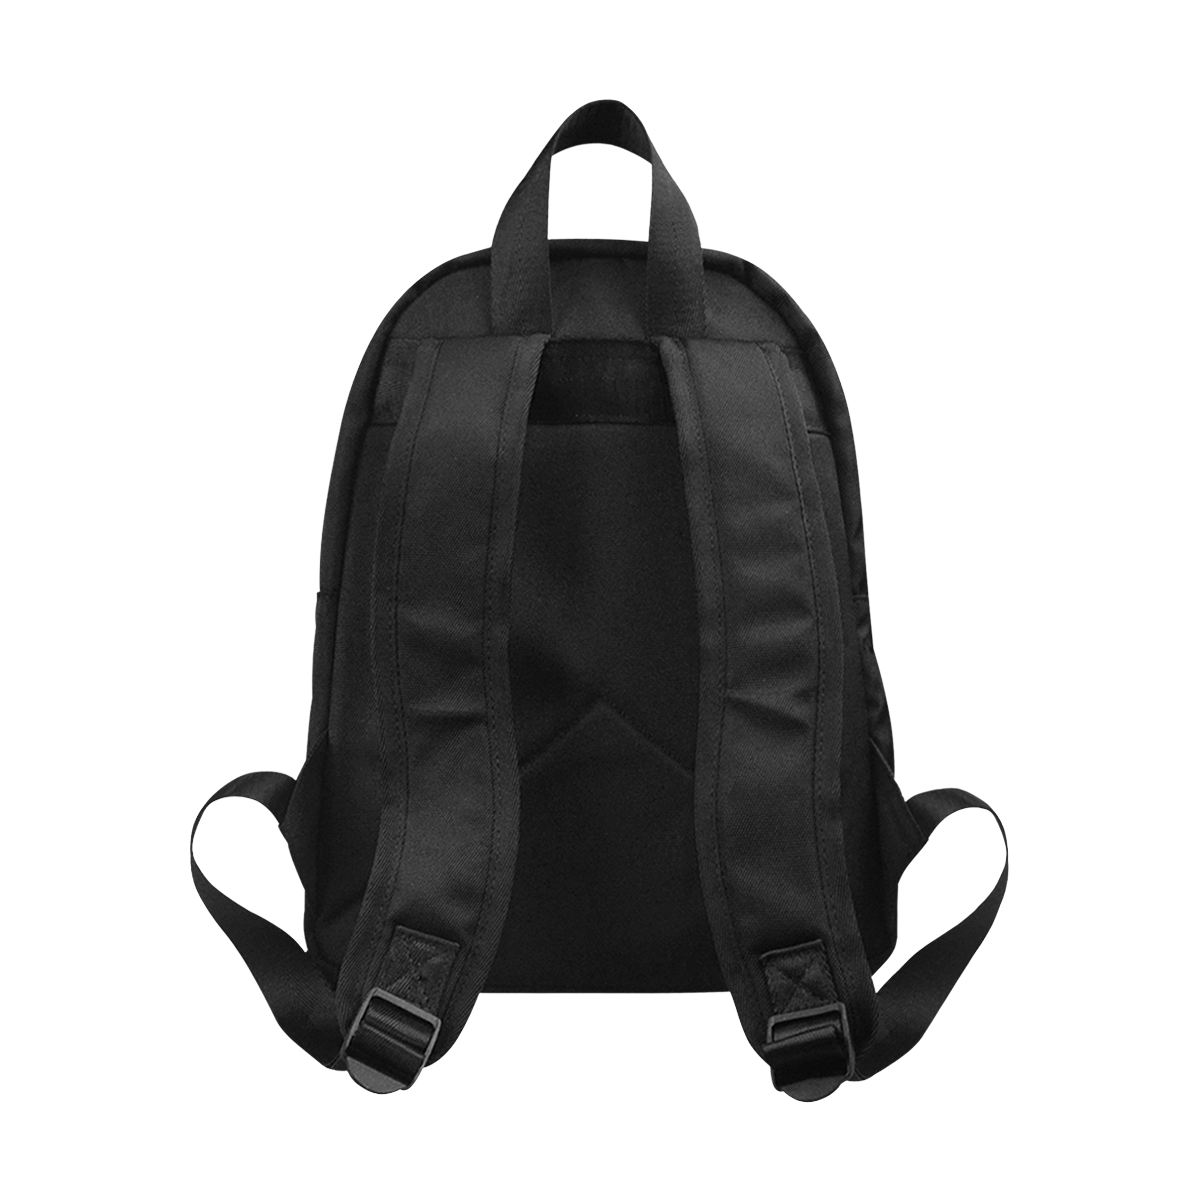 Broly - SuperSaiyan Fabric School Backpack (Model 1682) (Medium)